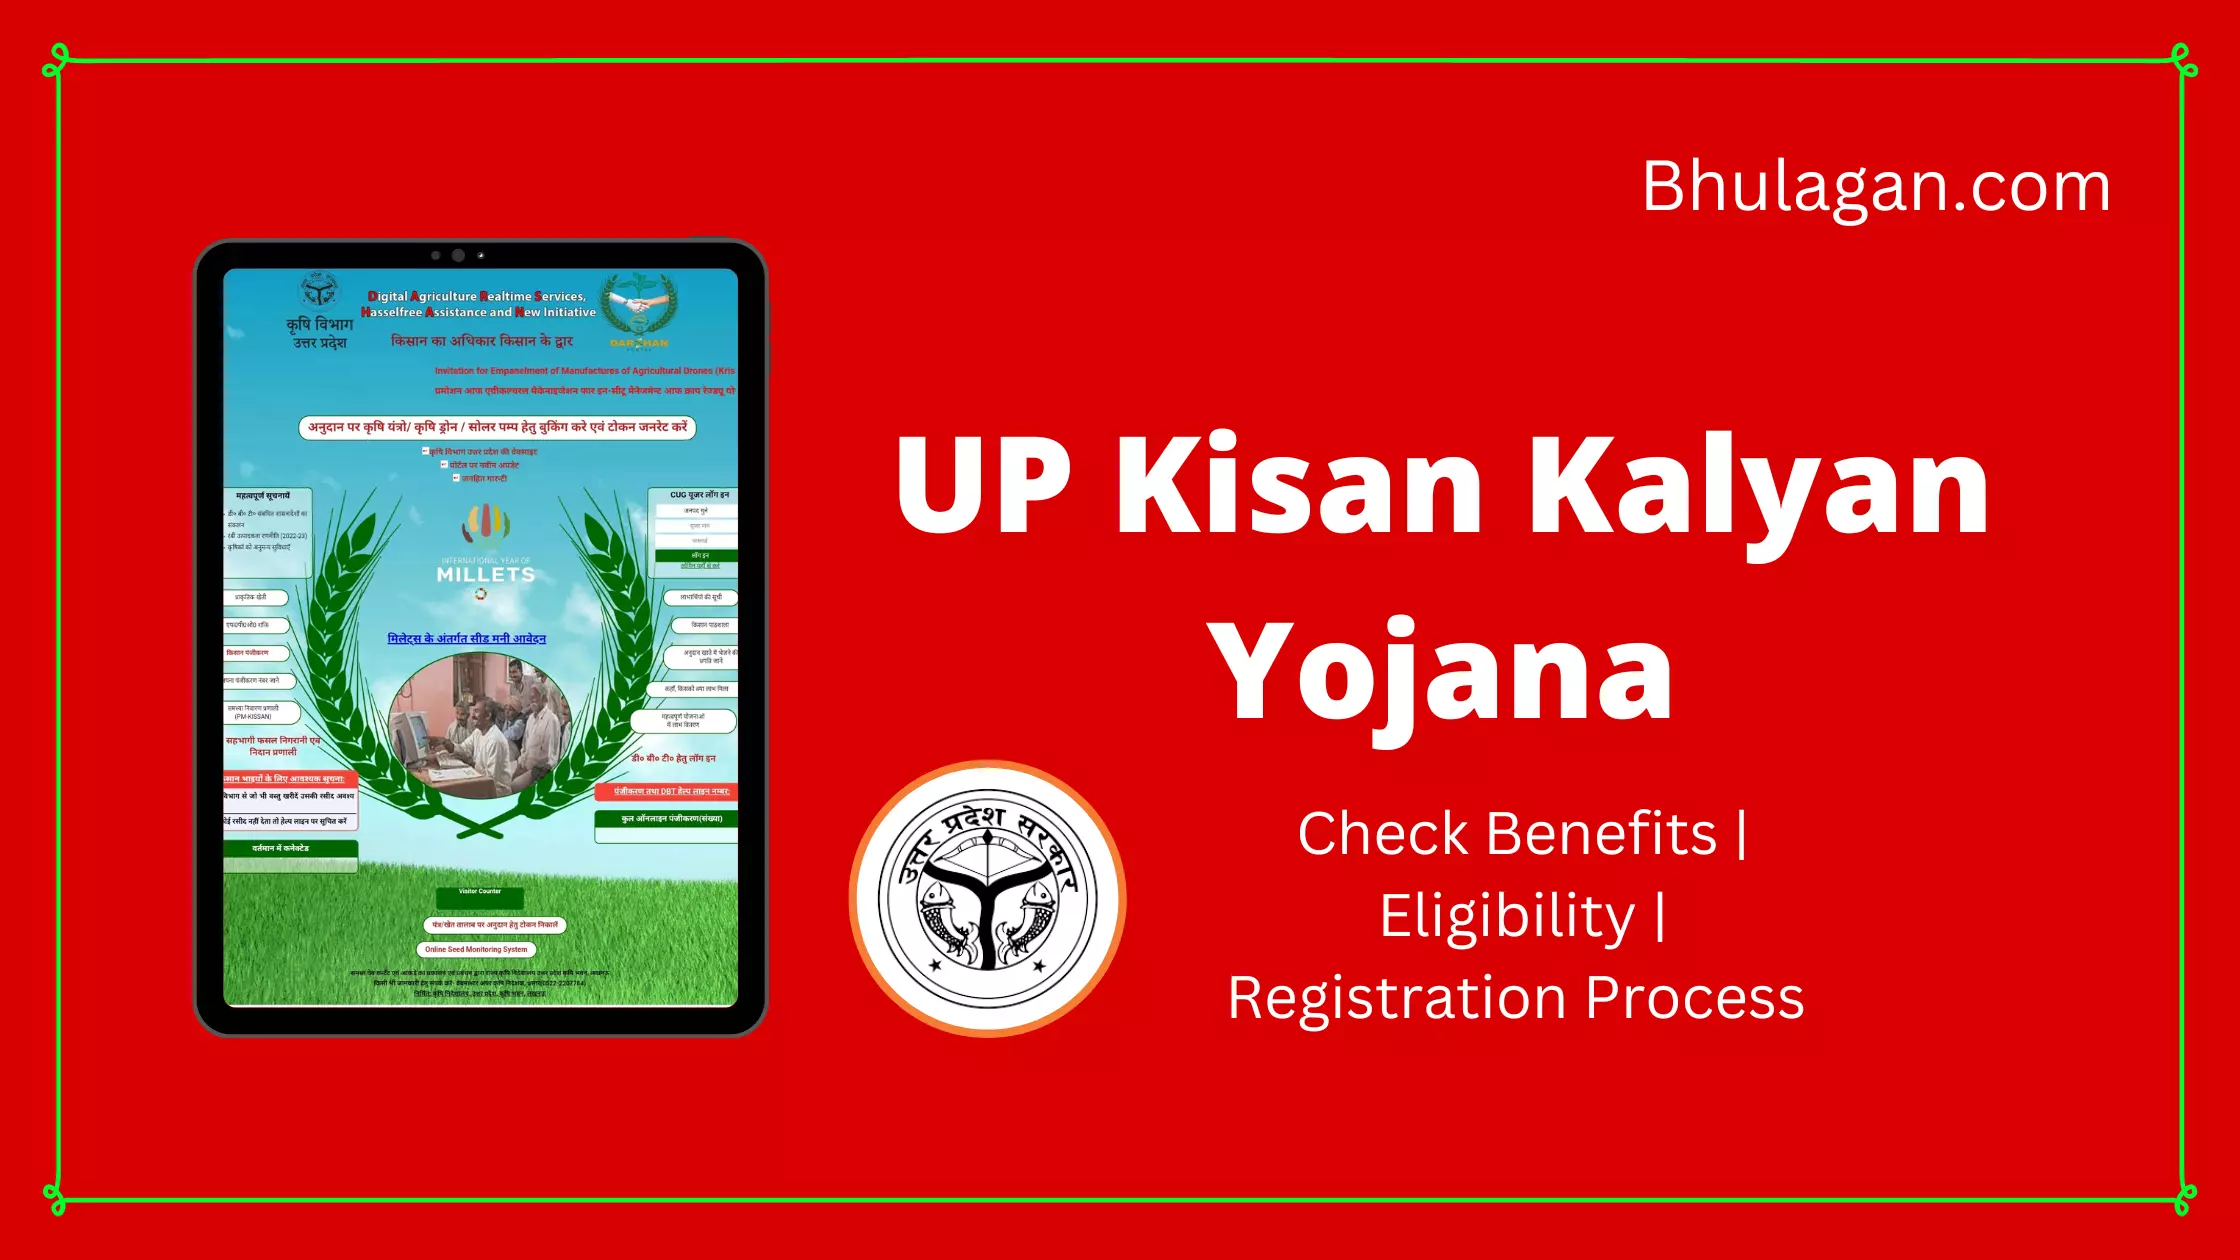 UP Kisan Kalyan Yojana